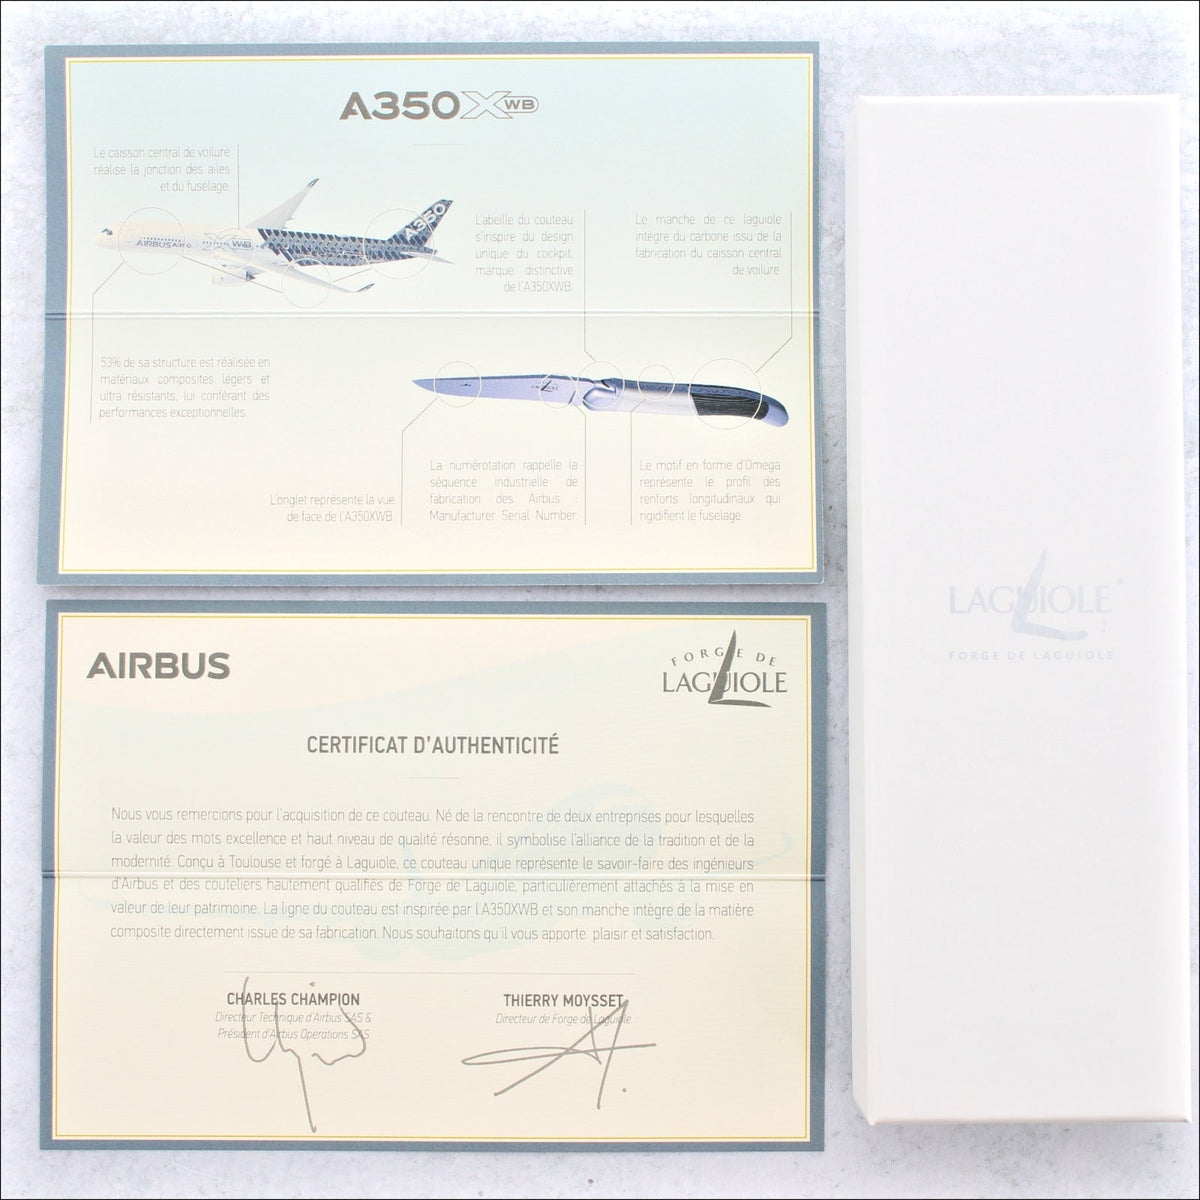 Airbus A350X-WB Carbon Fiber 11 cm Knife